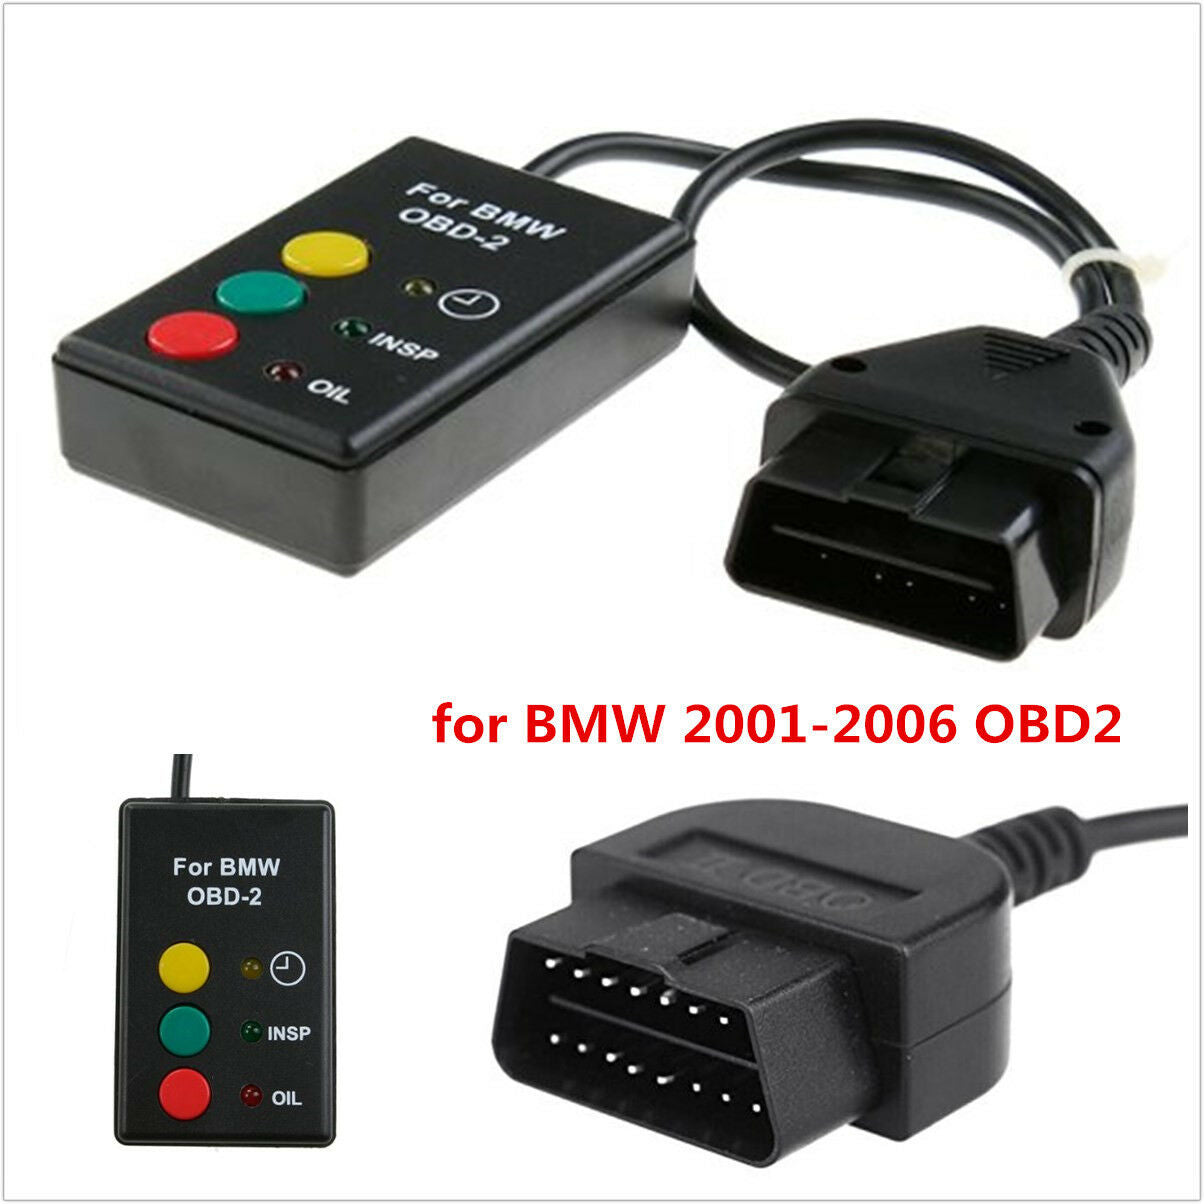 "OBD2 Car Airbag Scan/Oil Service/Inspection Light Reset Diagnostic Tool for BMW